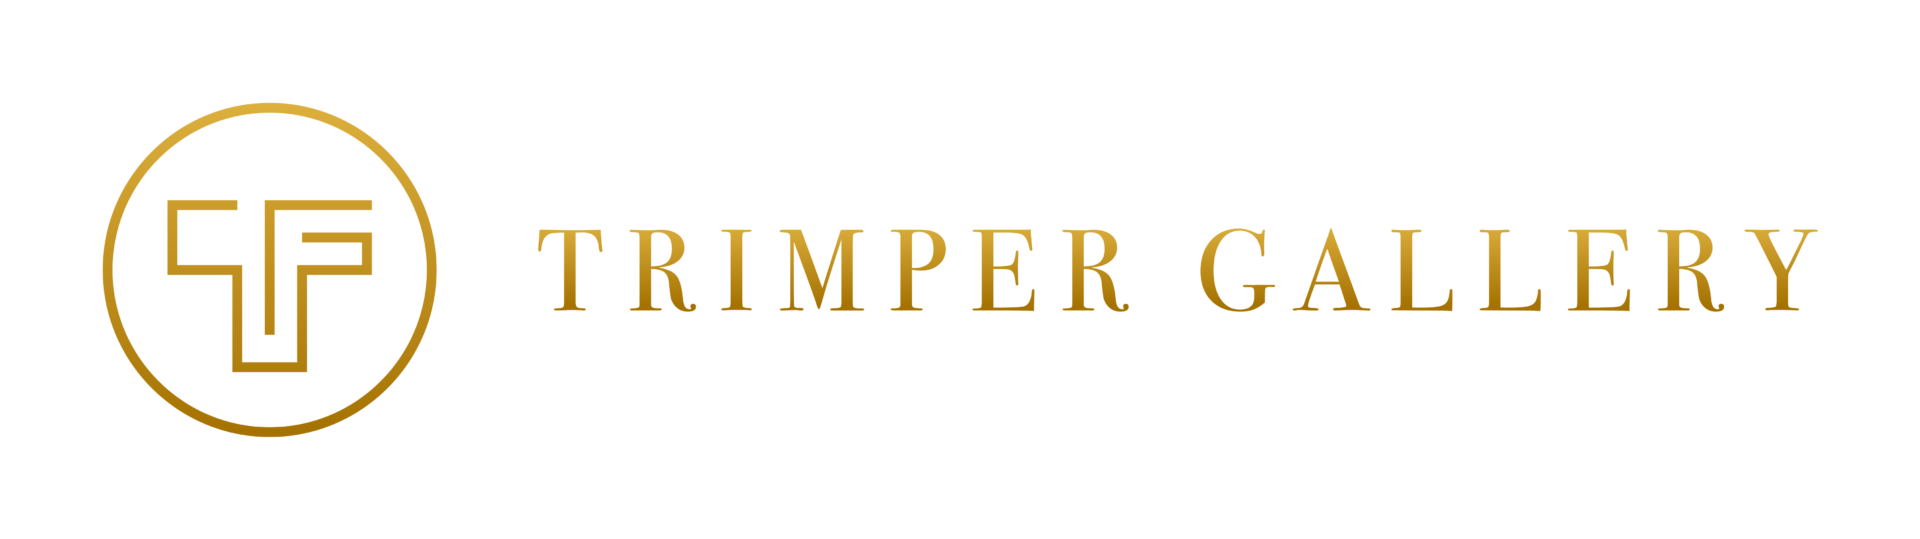 Trimper Gallery – Fine Art Gallery in Greenwich, CT